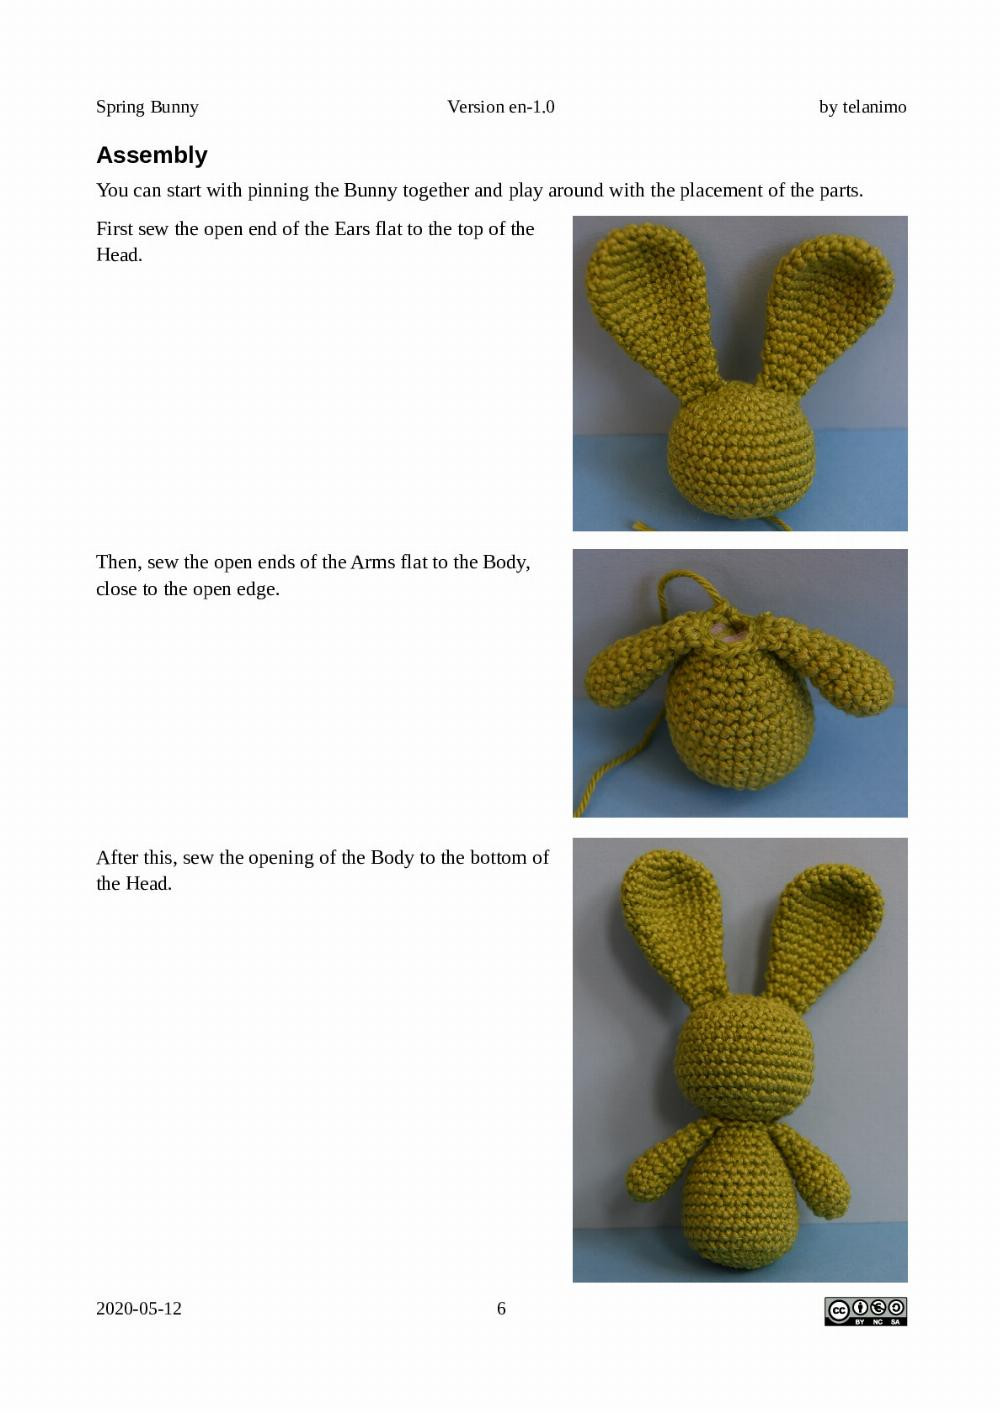 Spring Bunny crochet pattern